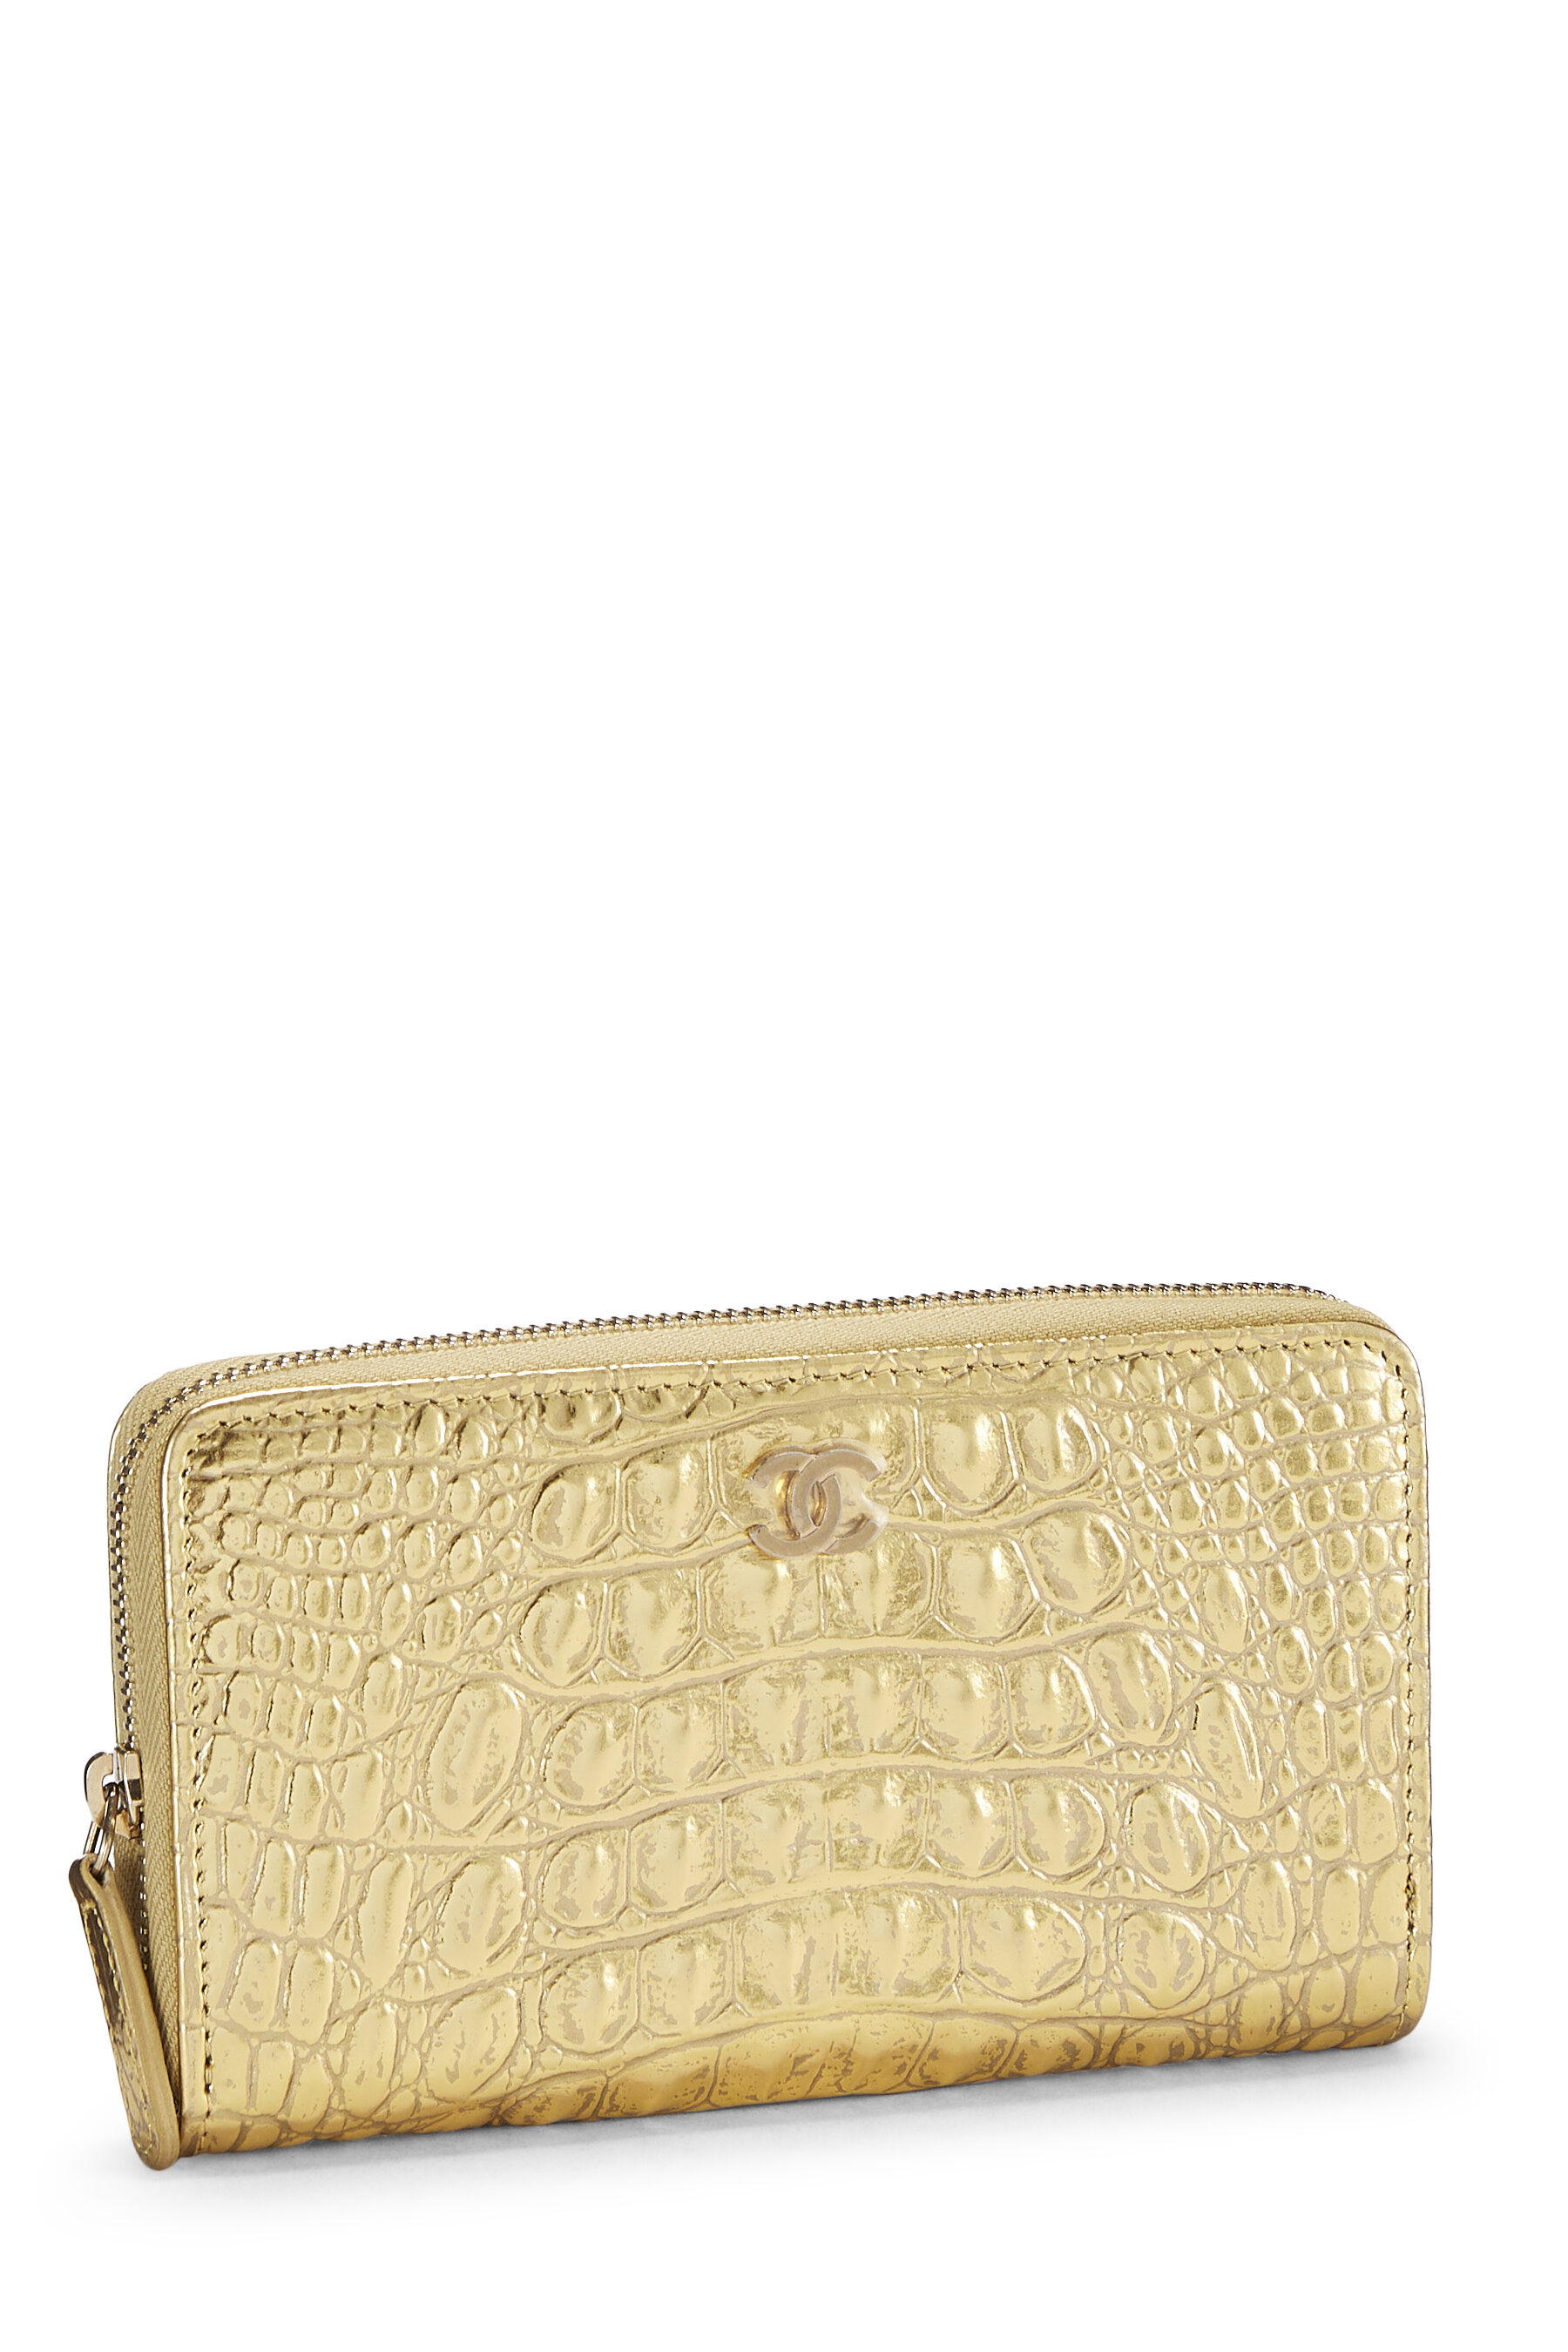 Chanel - Gold Embossed Crocodile Wallet